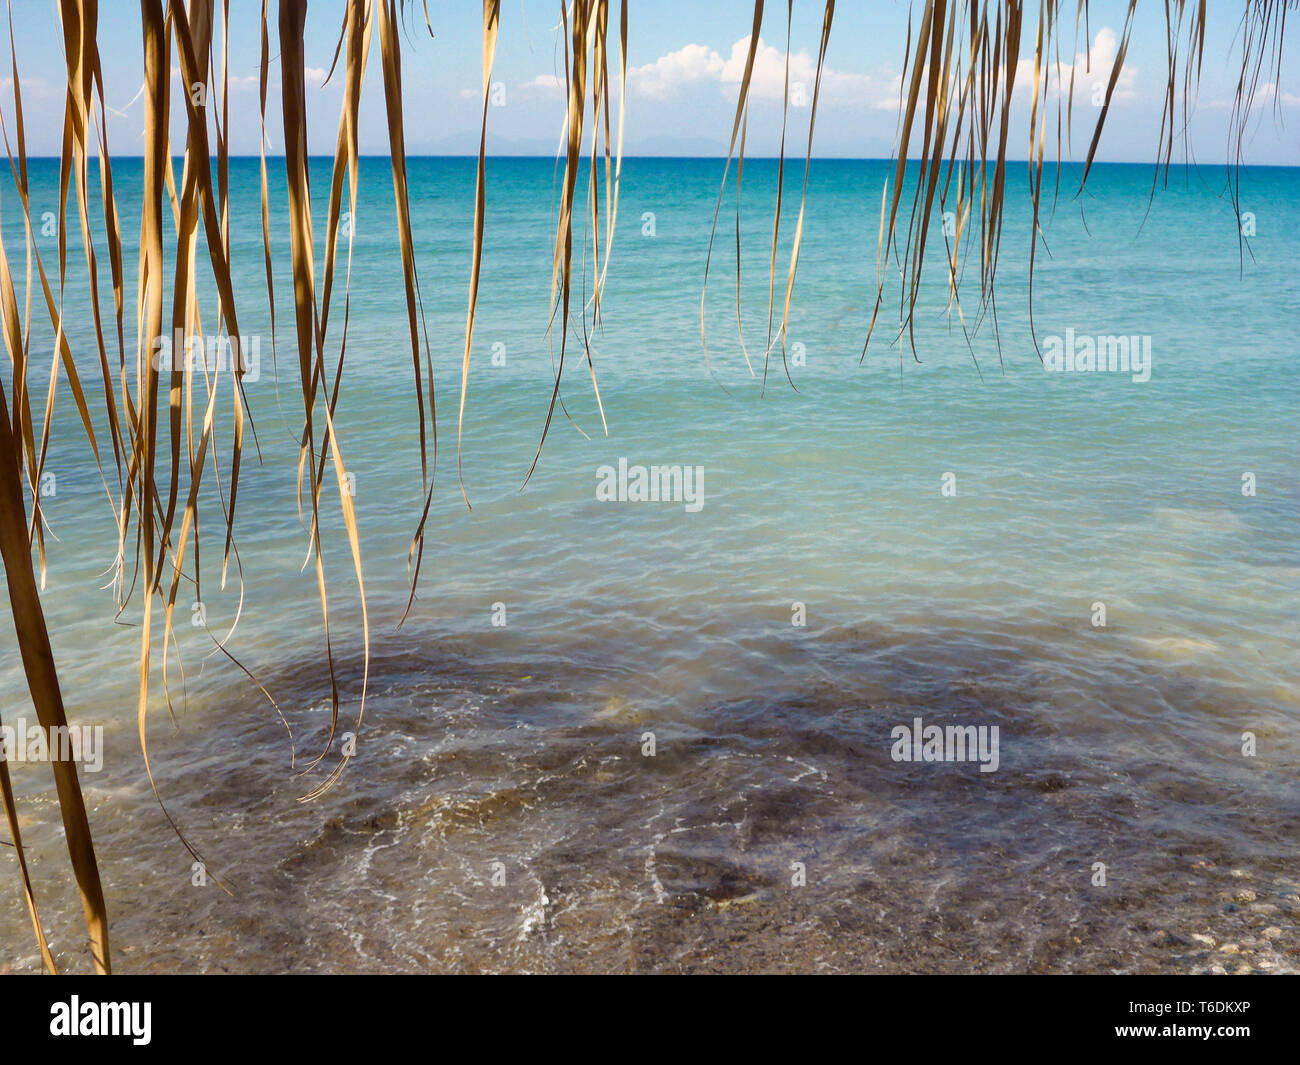 Urlaub auf Rhodos Griechenland am Strand mit Palmenwedel / Holiday on rhodes greece at the beach palm leaf Stock Photo